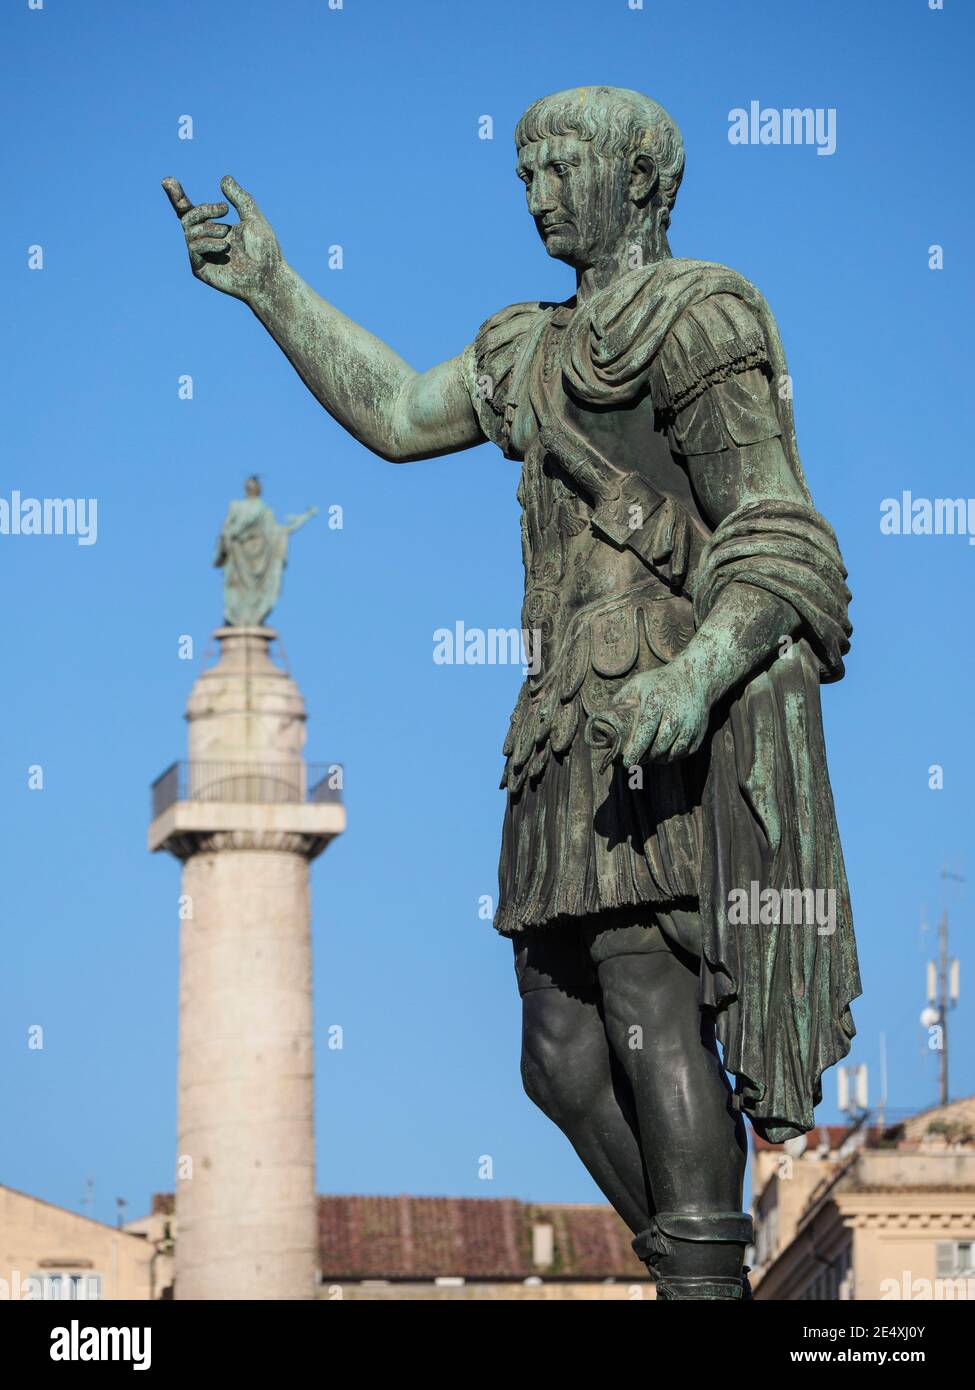 Roma. Italia. Estatua de bronce del emperador romano Trajano en Via dei Fori Imperiali, la columna de Trajano está en el fondo. 13 Emperador del Imperio Romano Foto de stock